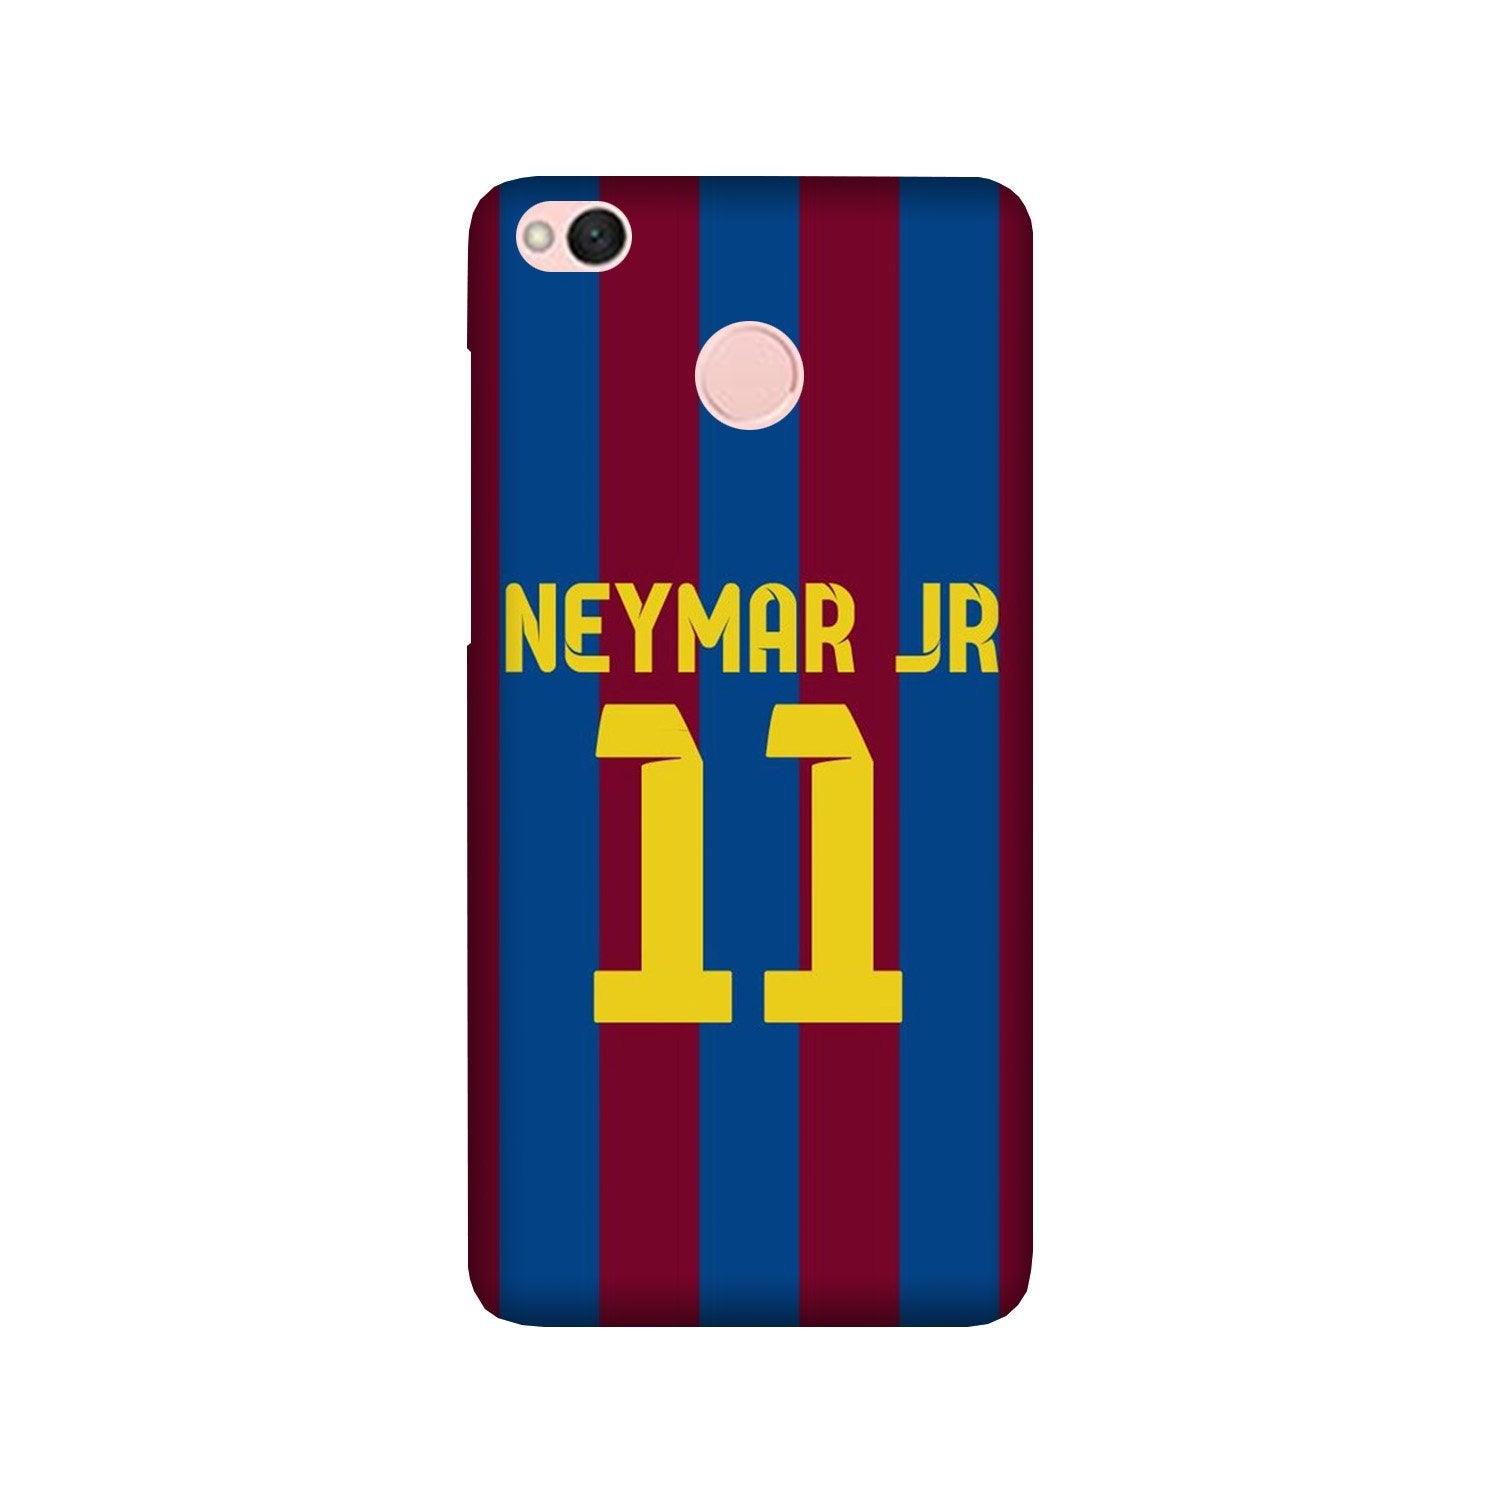 Neymar Jr Case for Redmi 4(Design - 162)